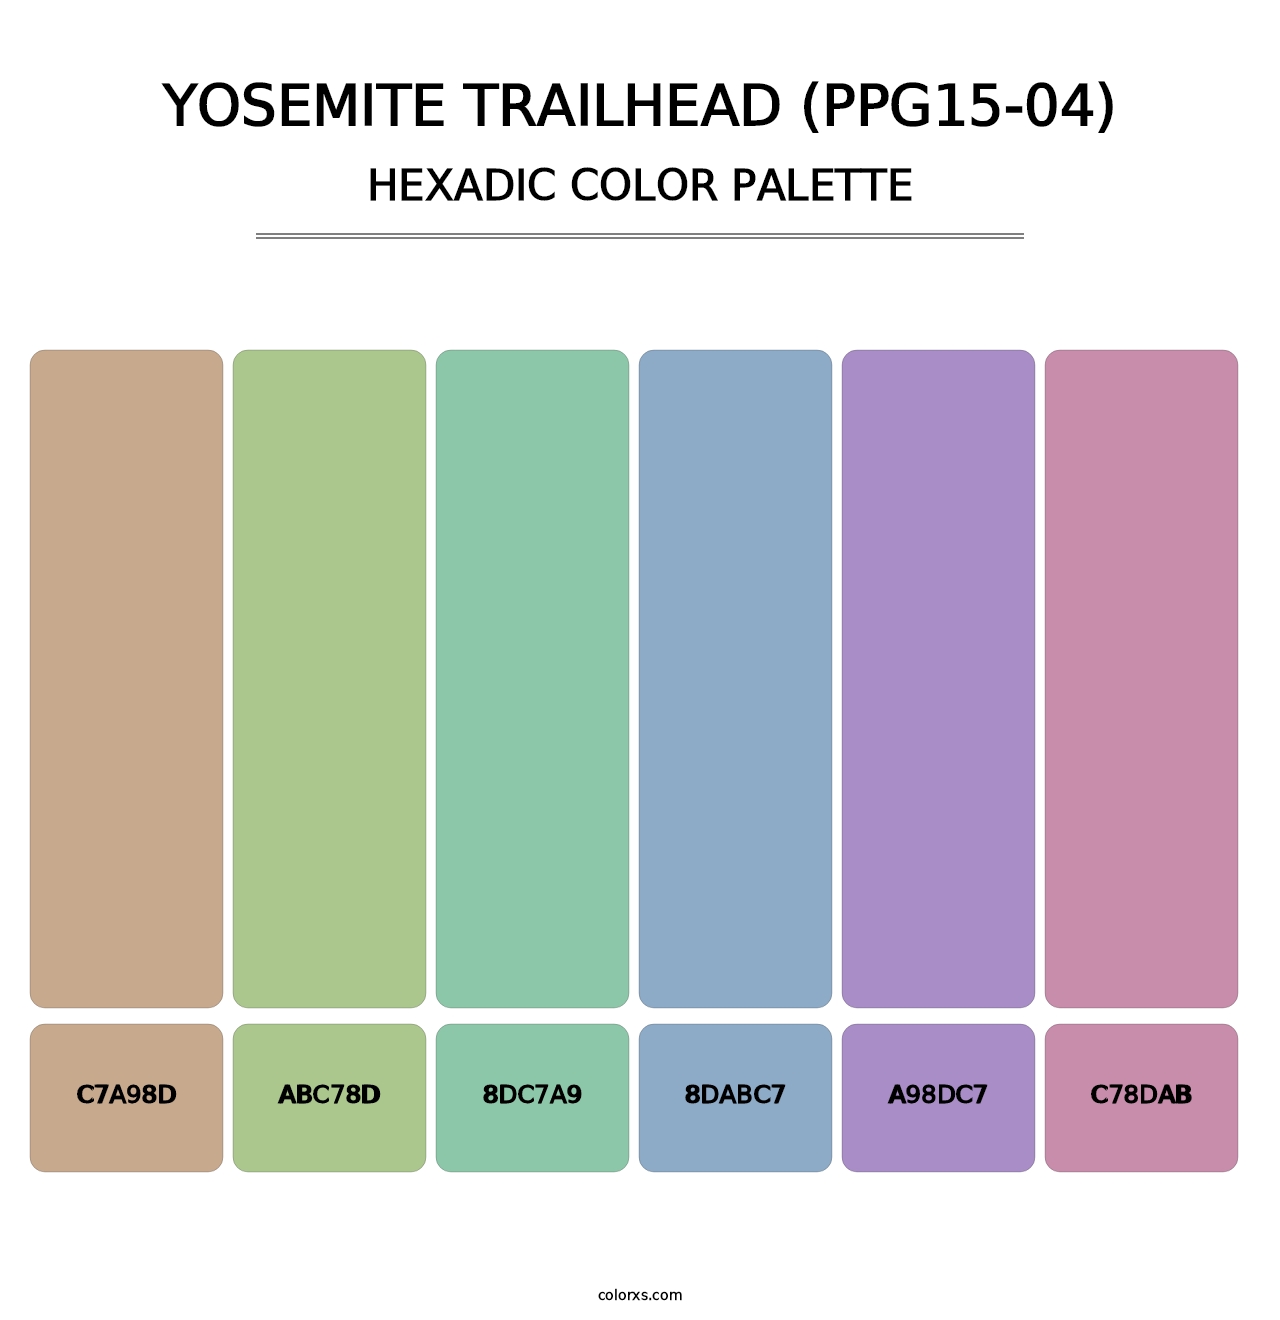 Yosemite Trailhead (PPG15-04) - Hexadic Color Palette